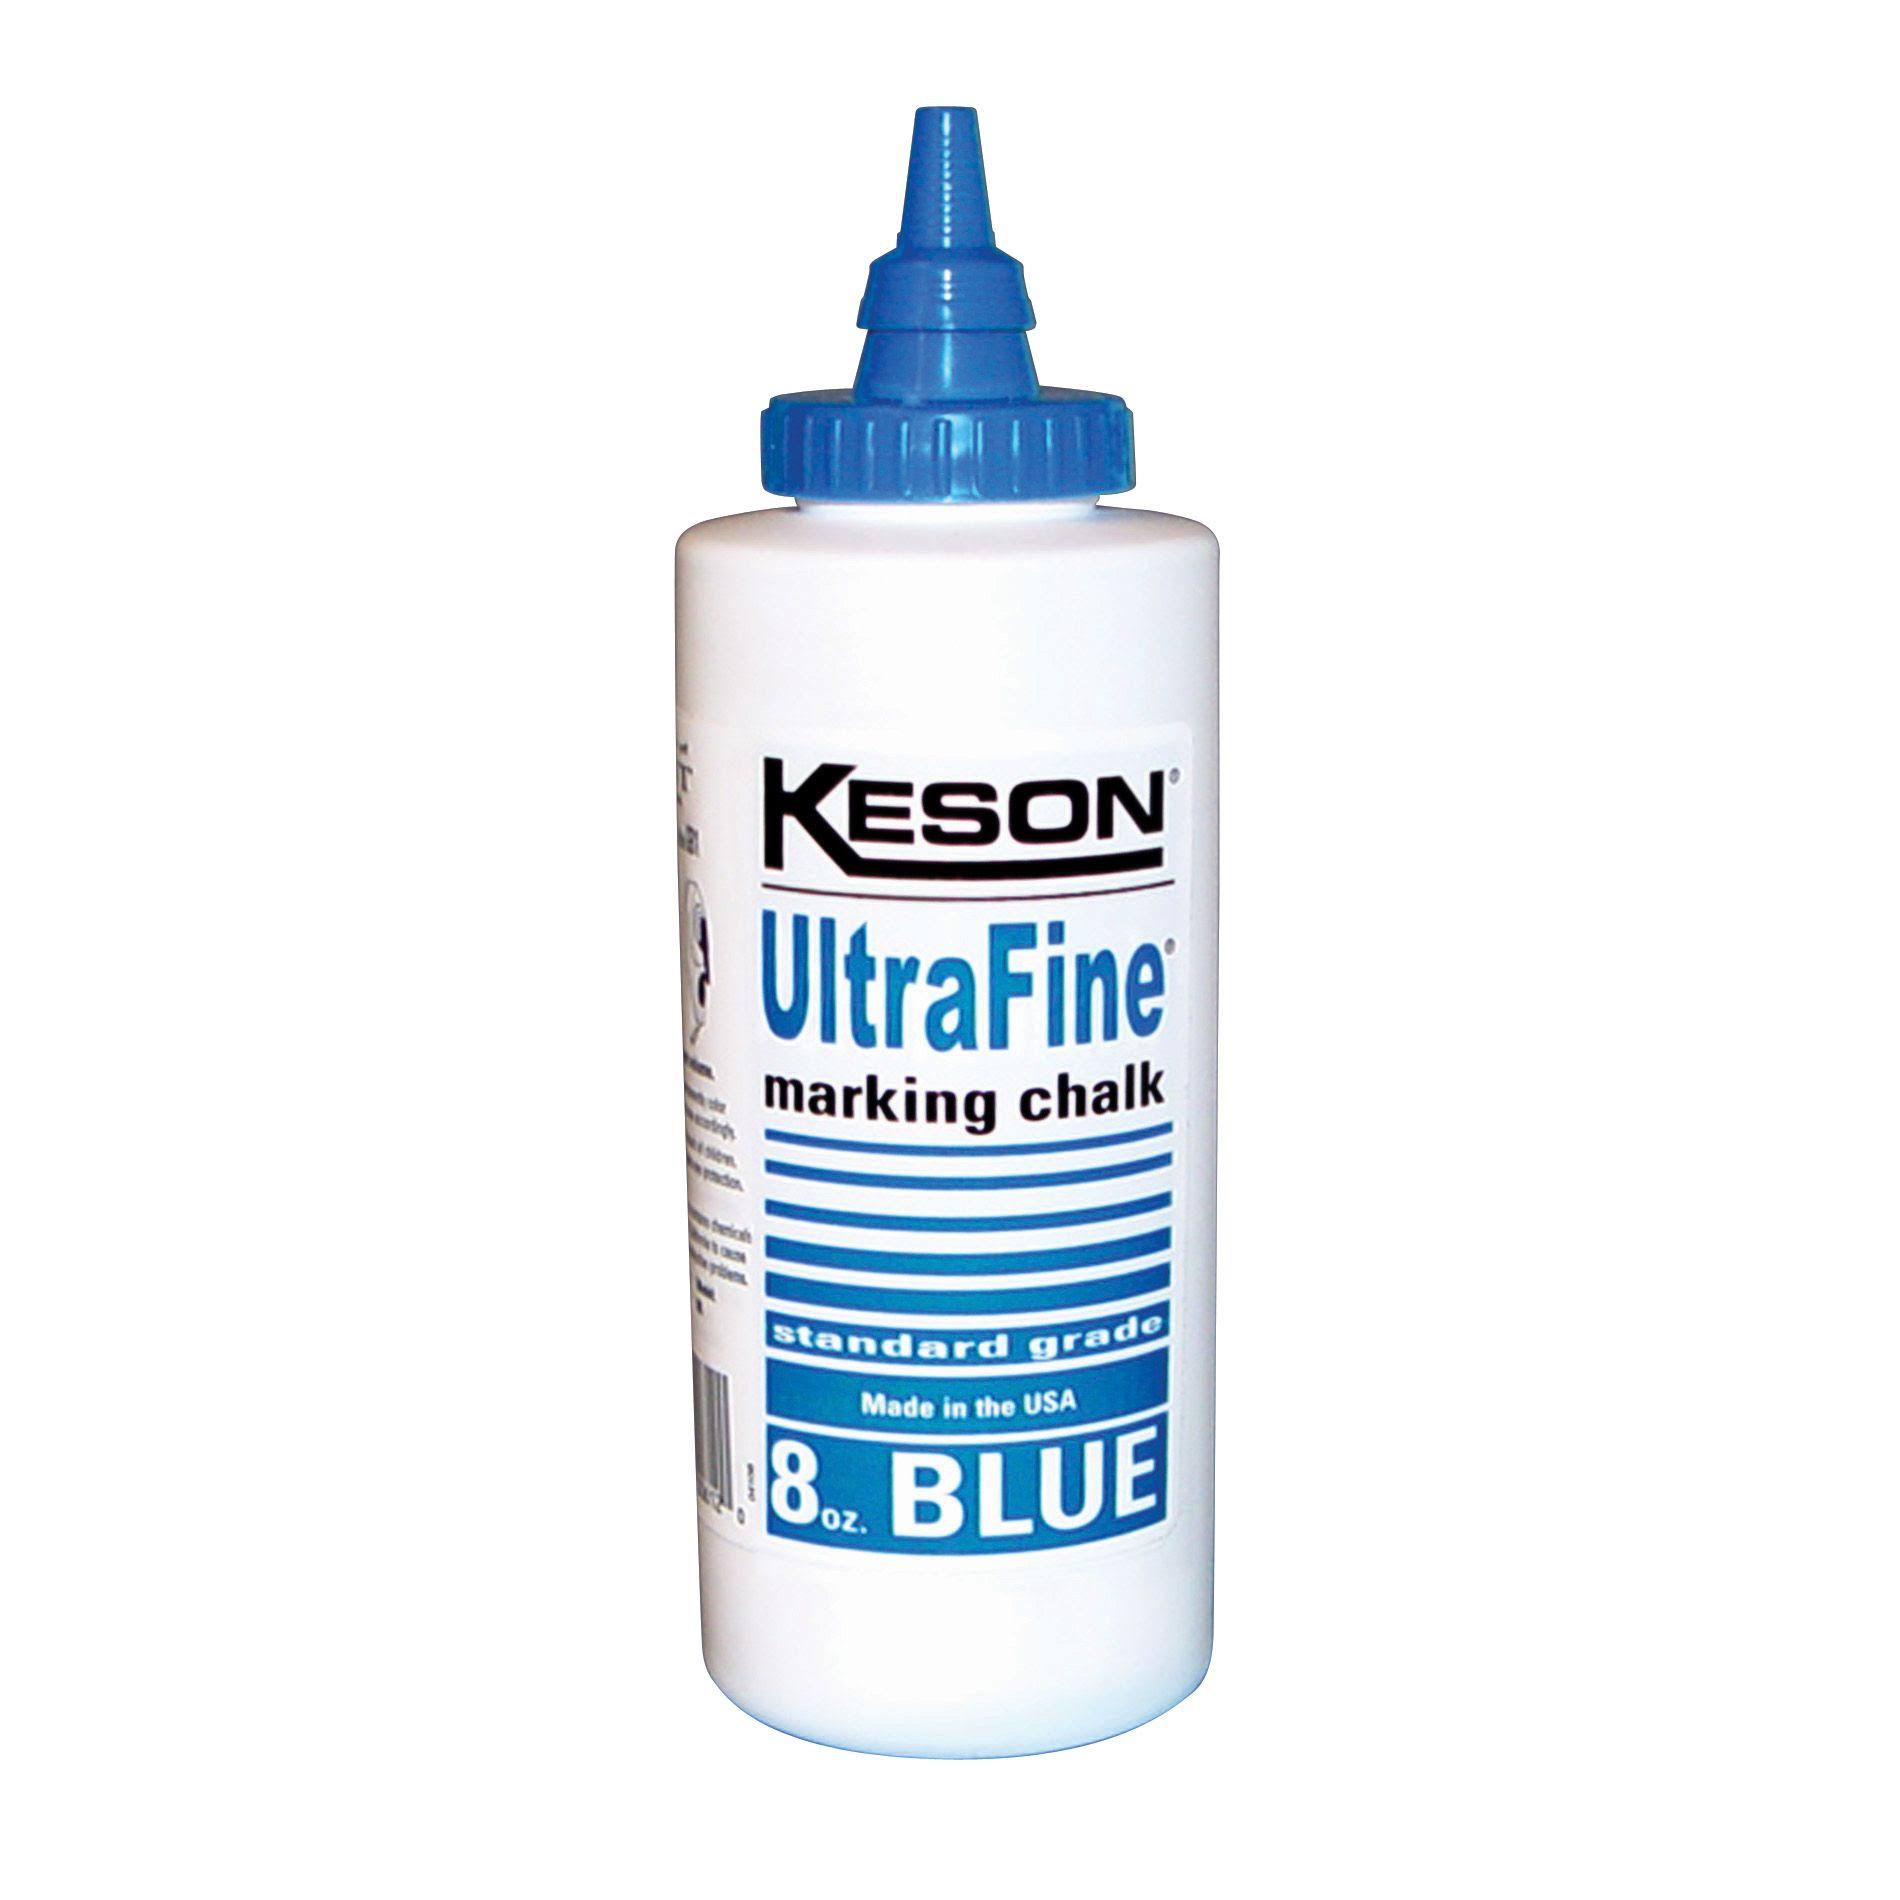 Keson Ultra Fine Marking Chalk - Blue, 8oz